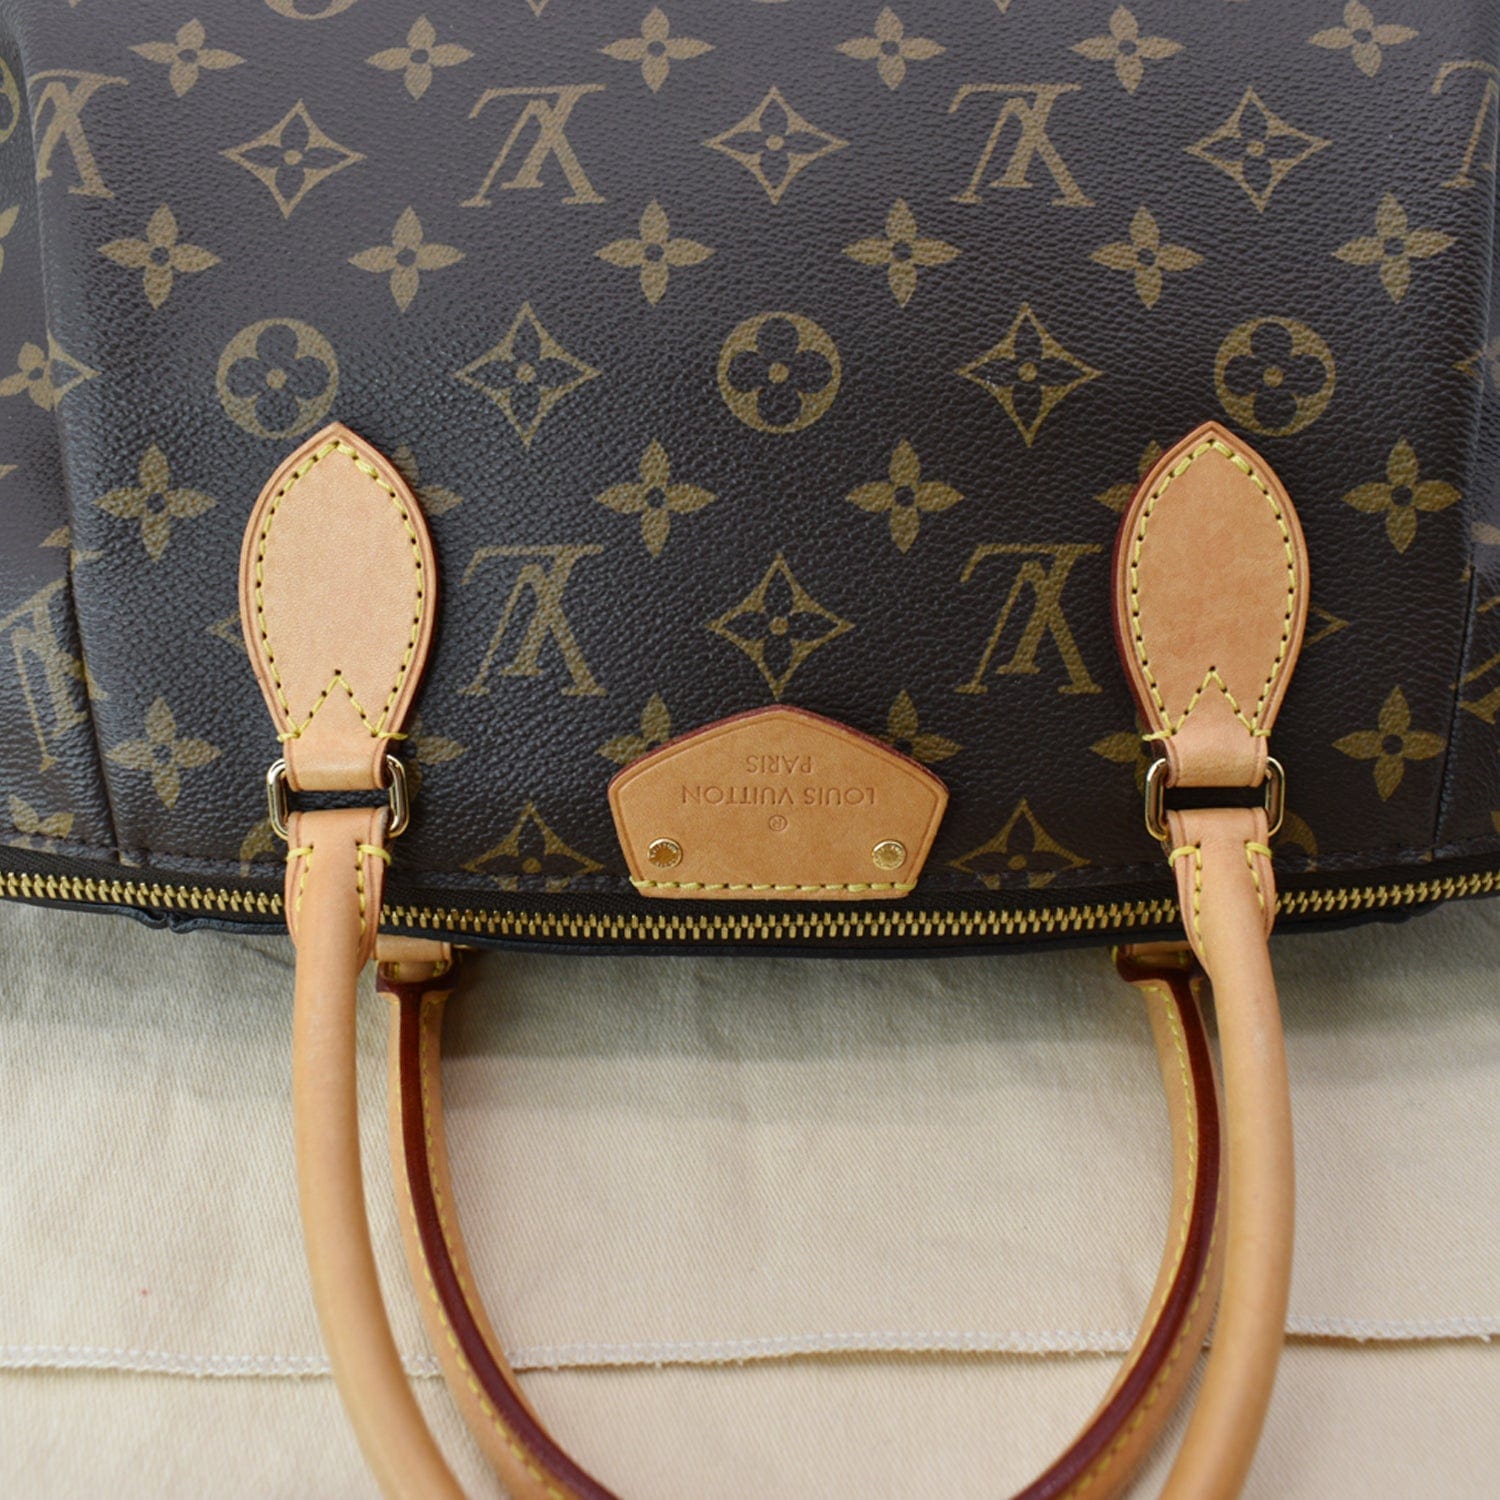 Louis Vuitton Monogram Turenne MM Handbag - A World Of Goods For